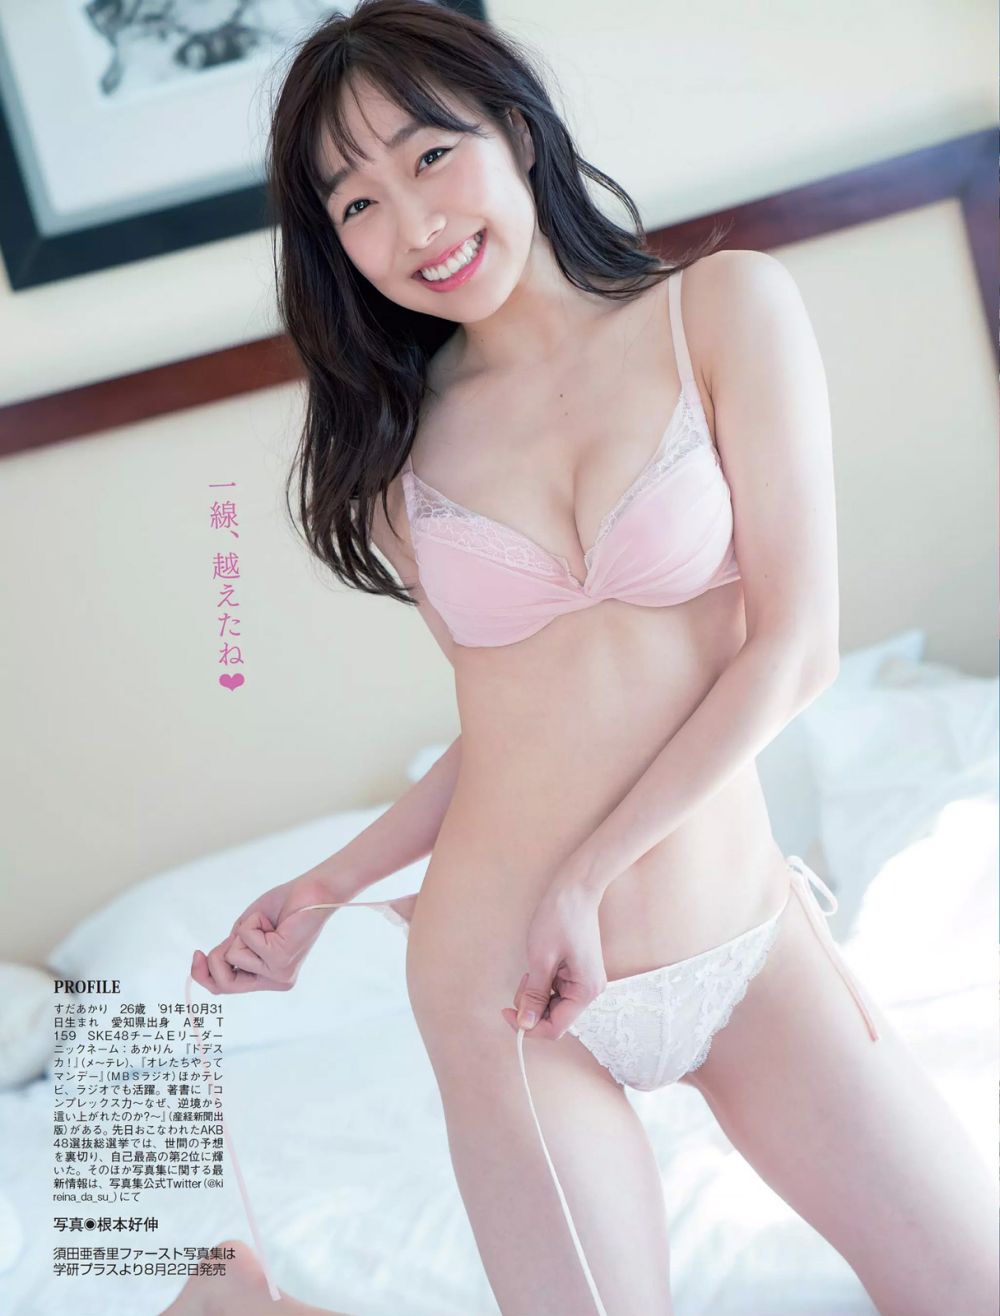 Akari Suda Sexy and Hottest Photos , Latest Pics